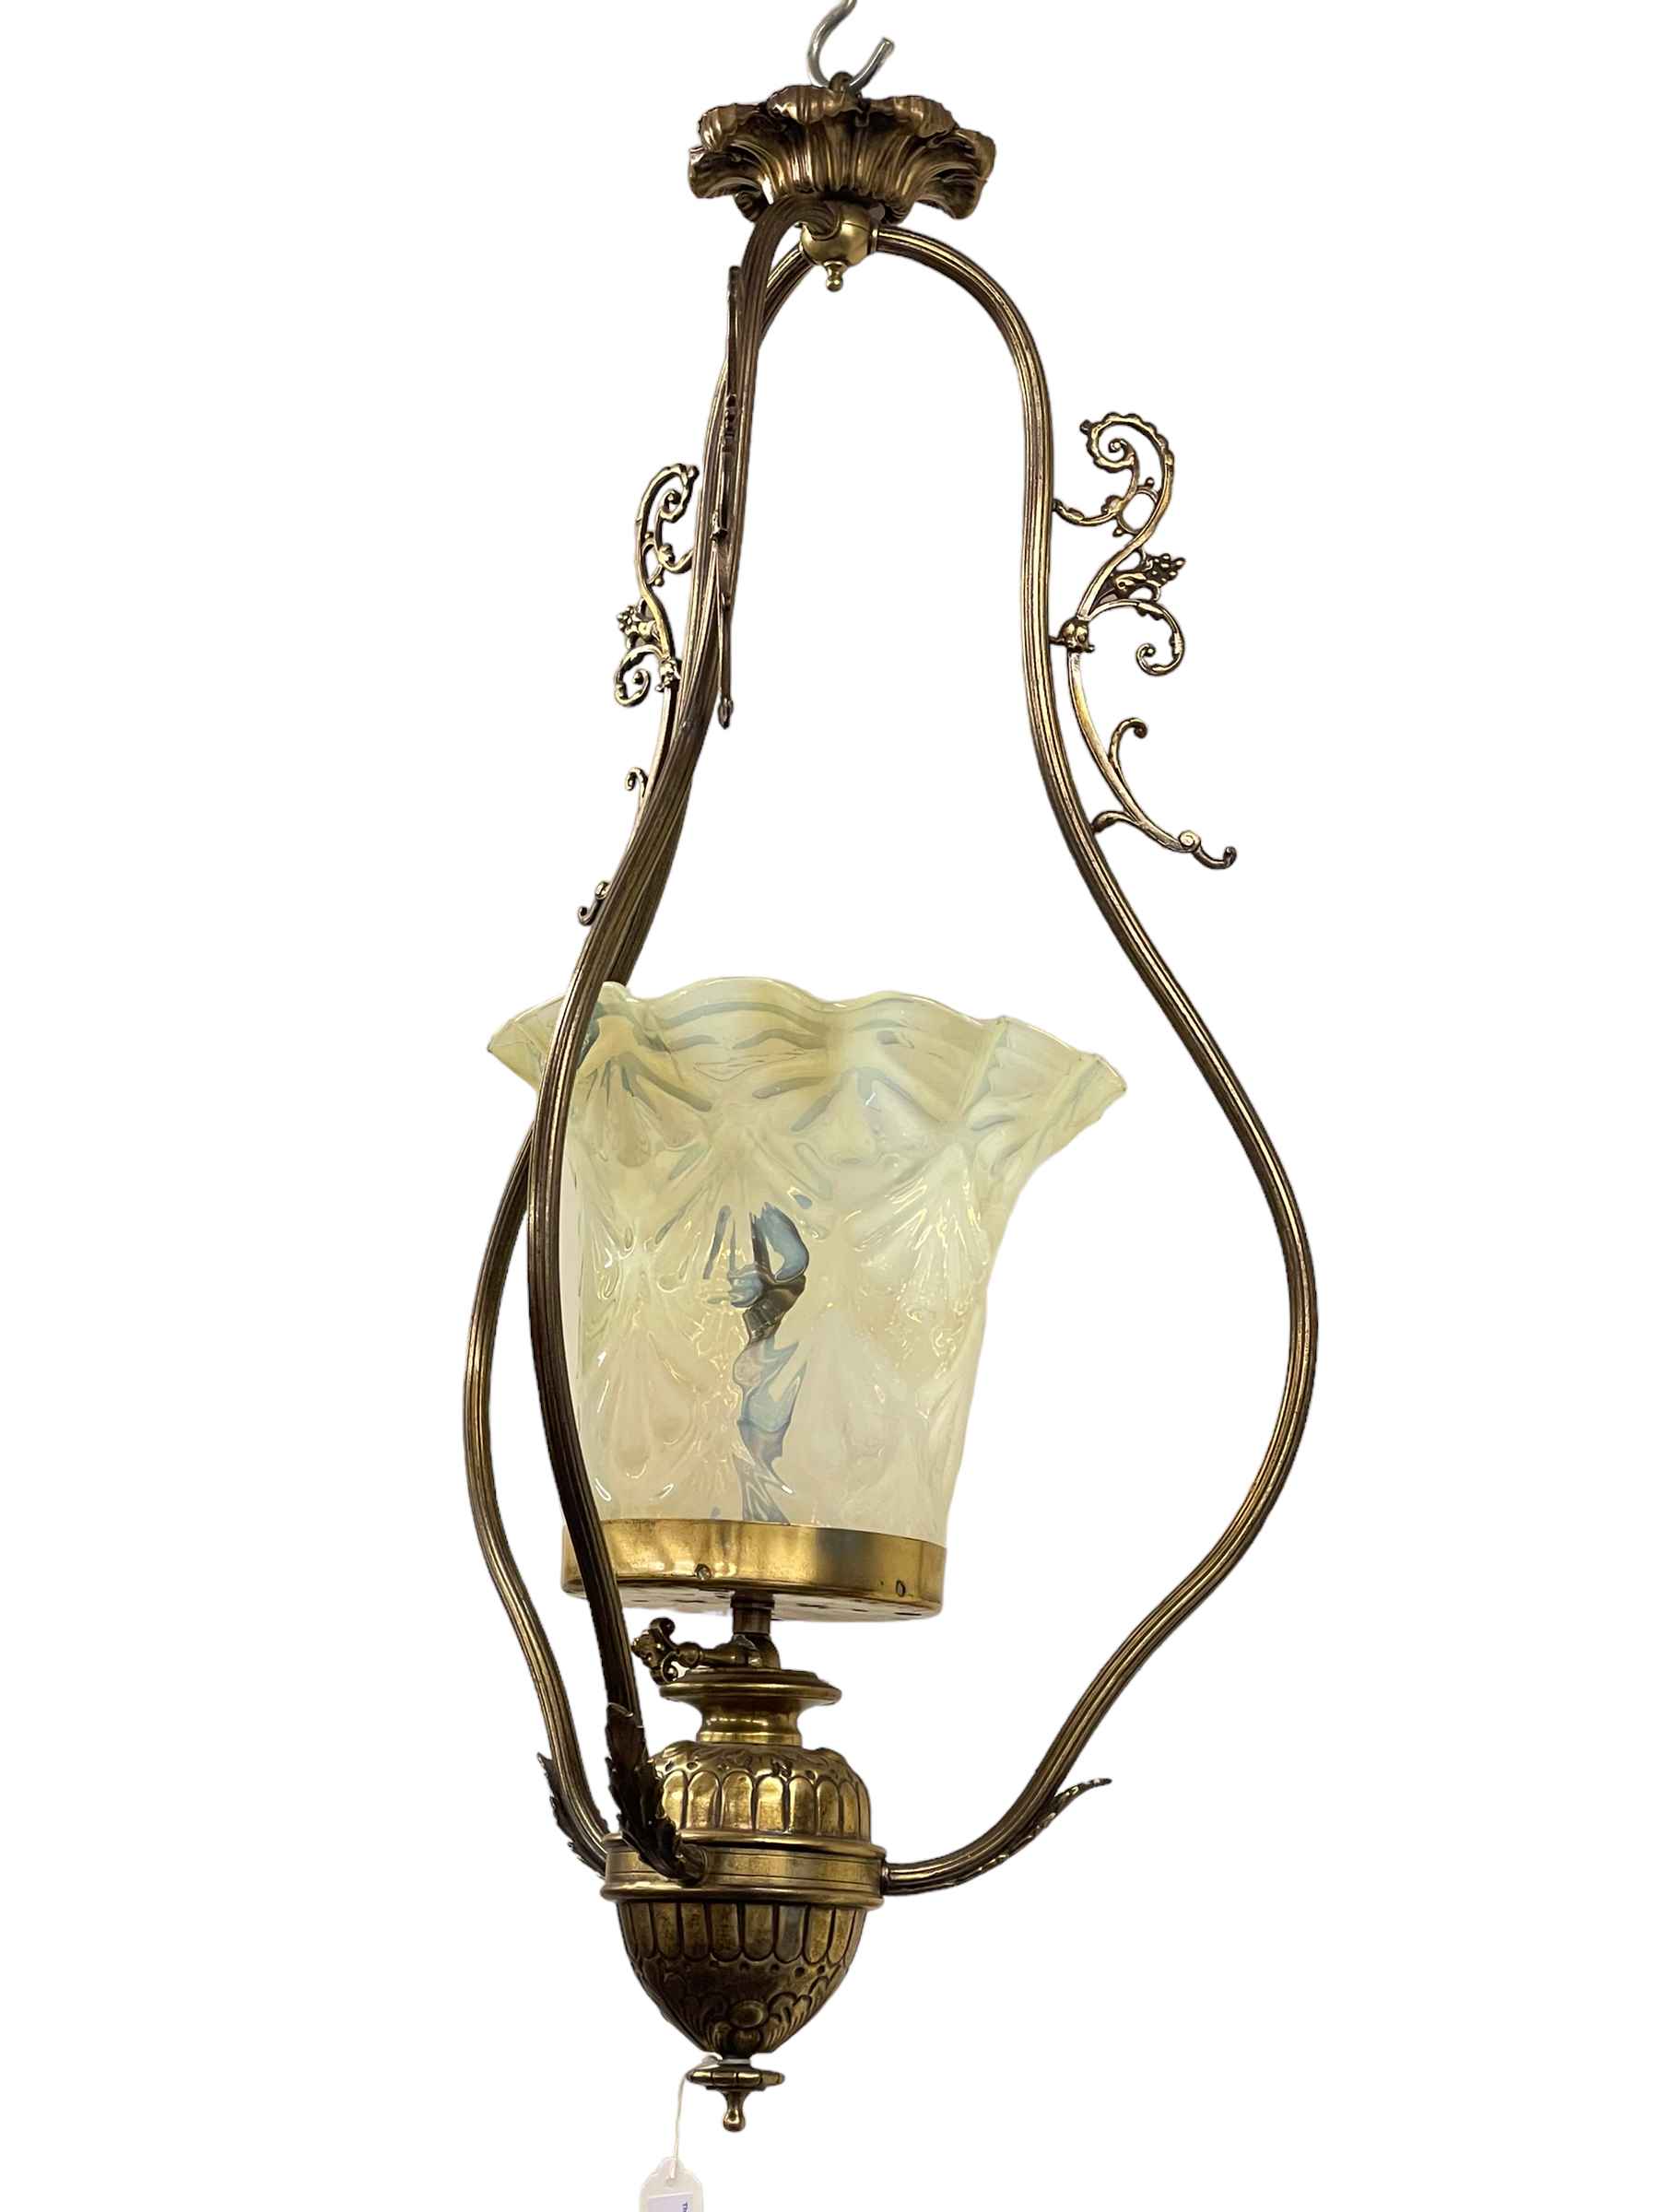 Ornate brass ceiling light with vaseline shade.